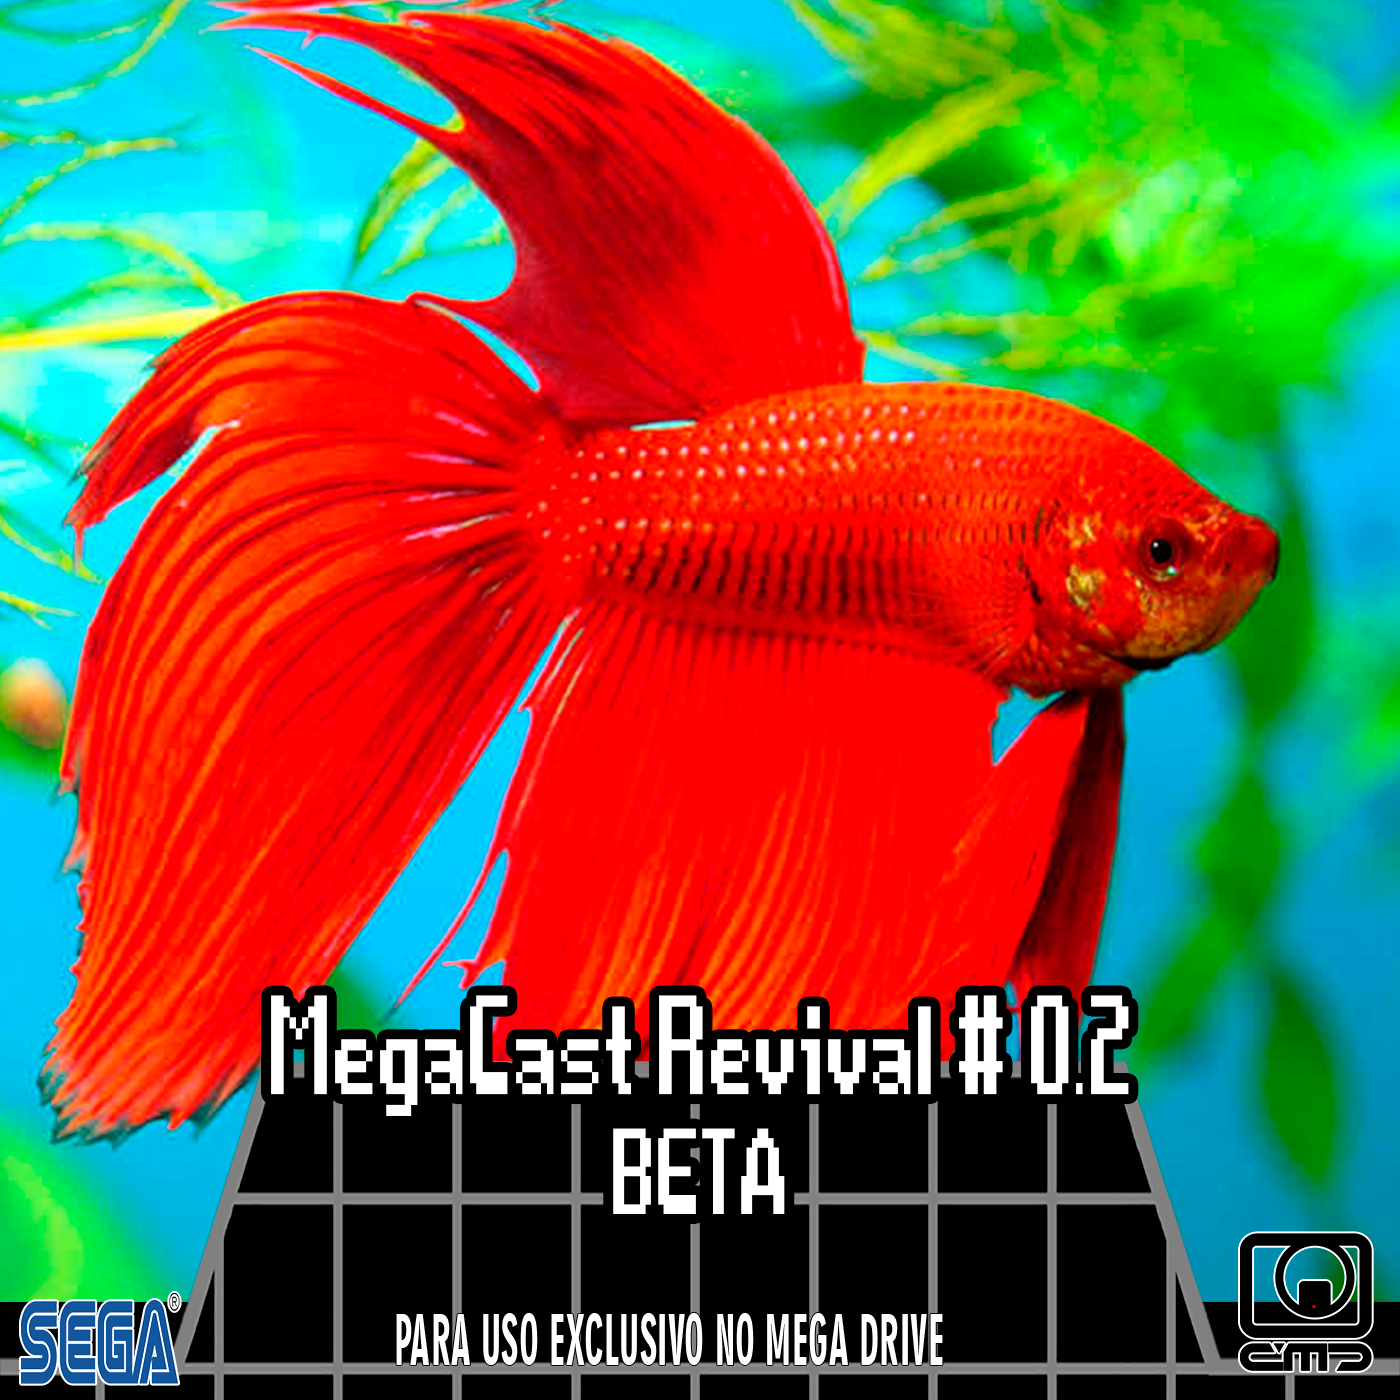 MegaCast Revival # 0.2 – Beta